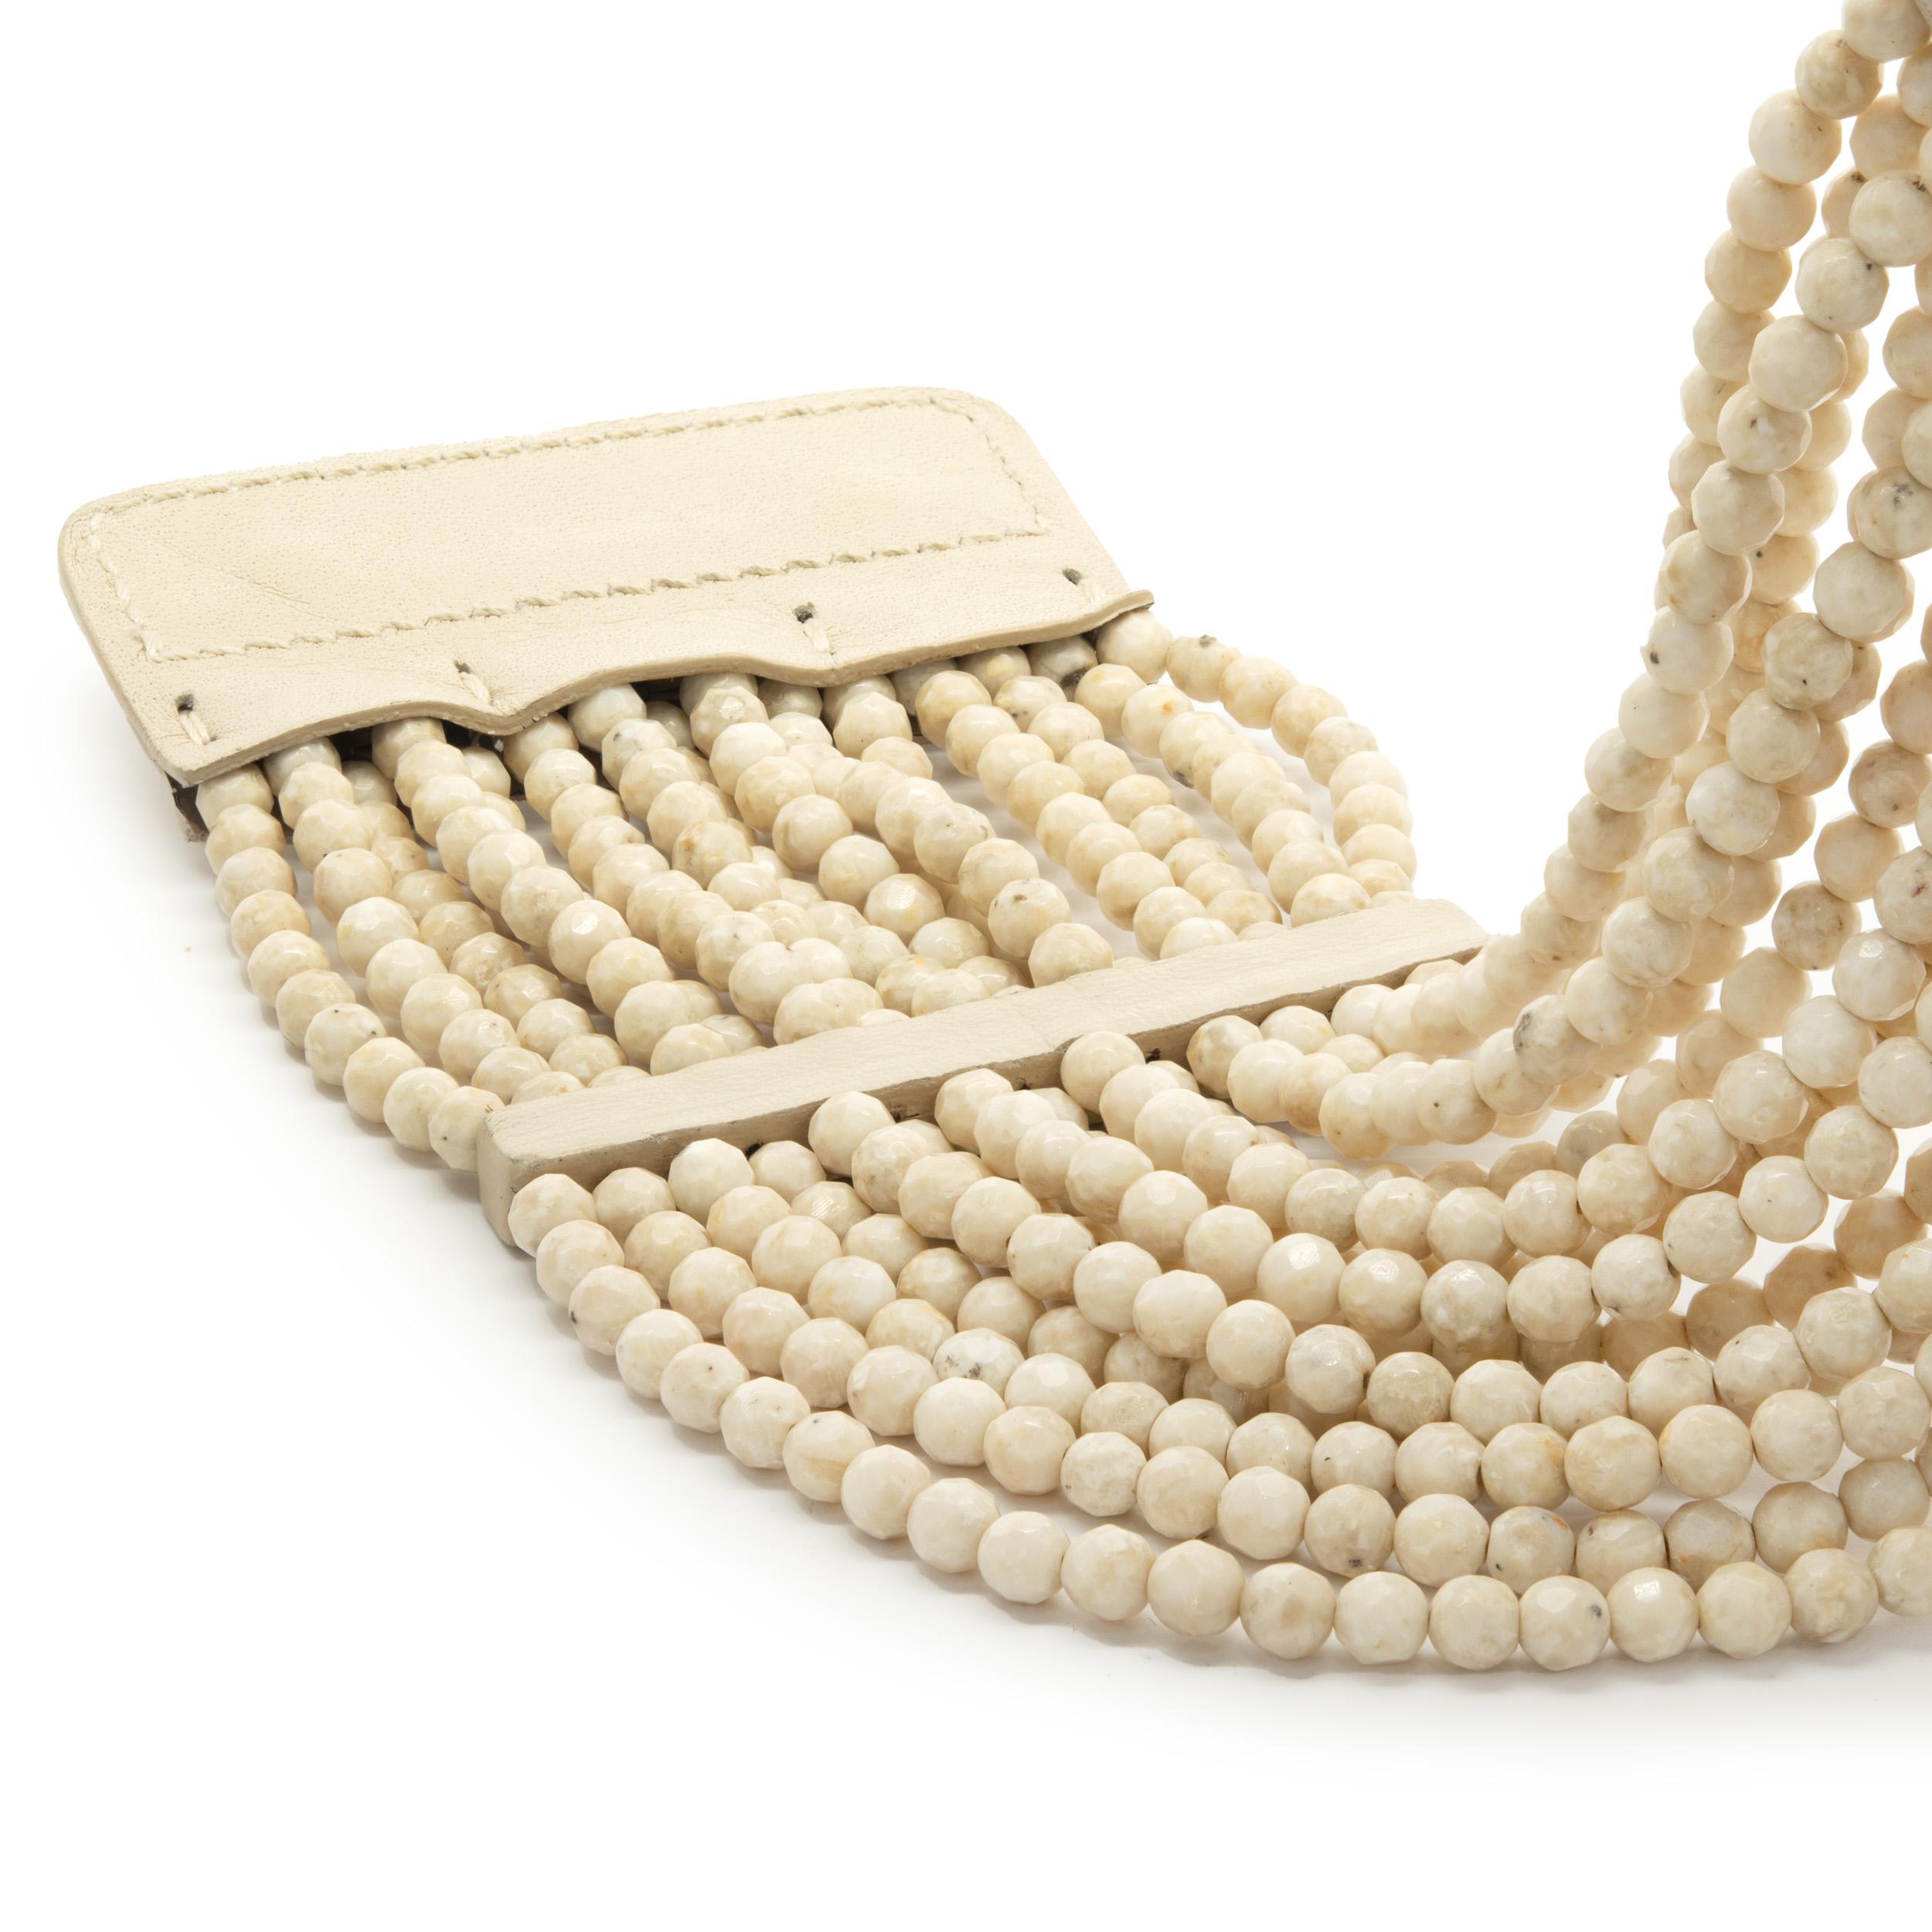 Designer: custom
Material: cream beads
Weight: 161.14 grams
Dimensions: collar measures 16-inches